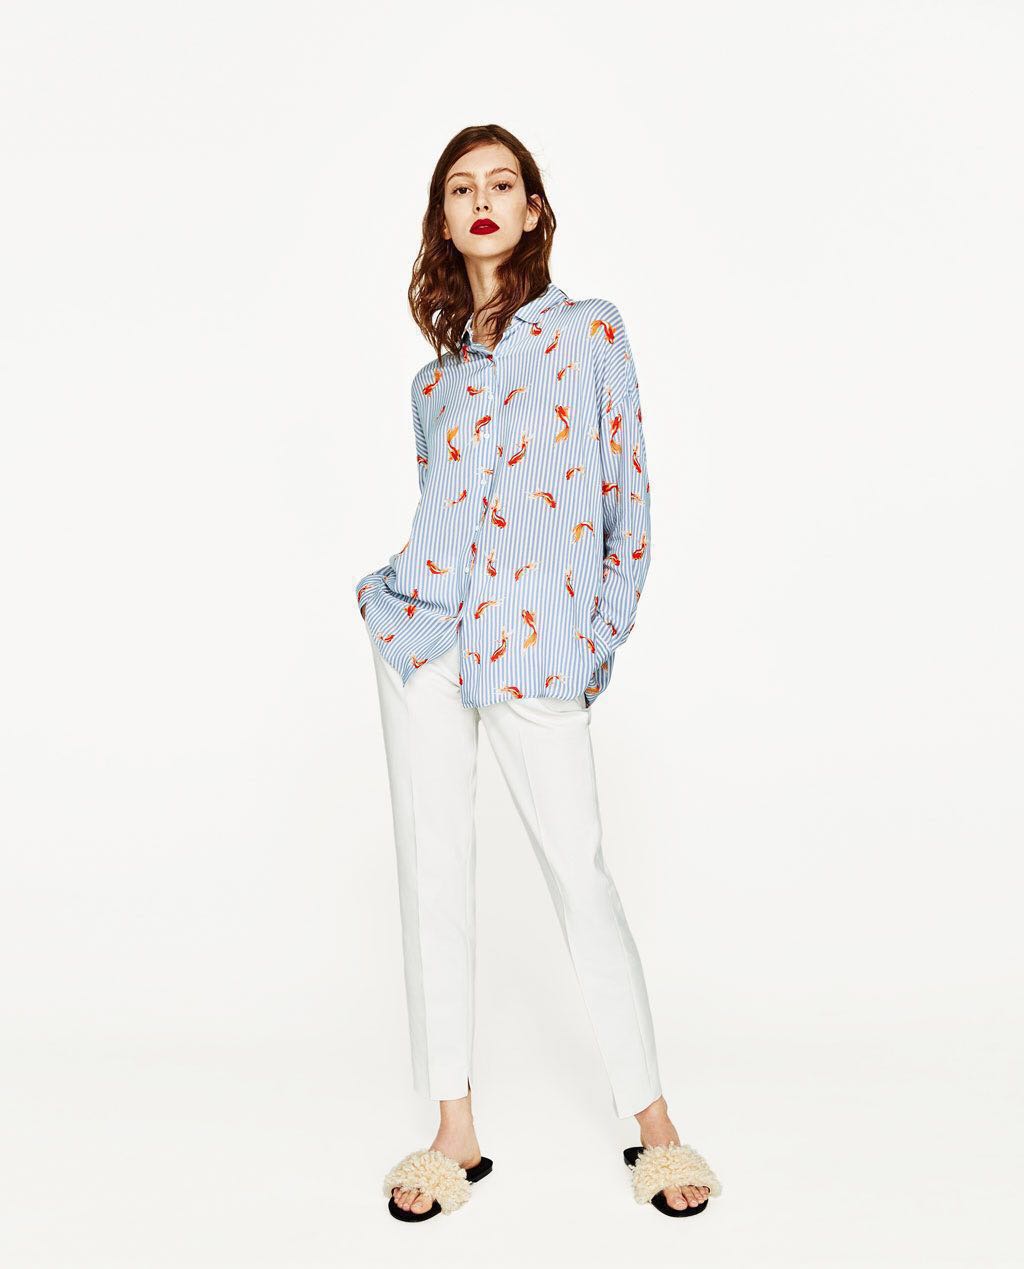 Zara Goldfish Shirt, Women's Fashion 